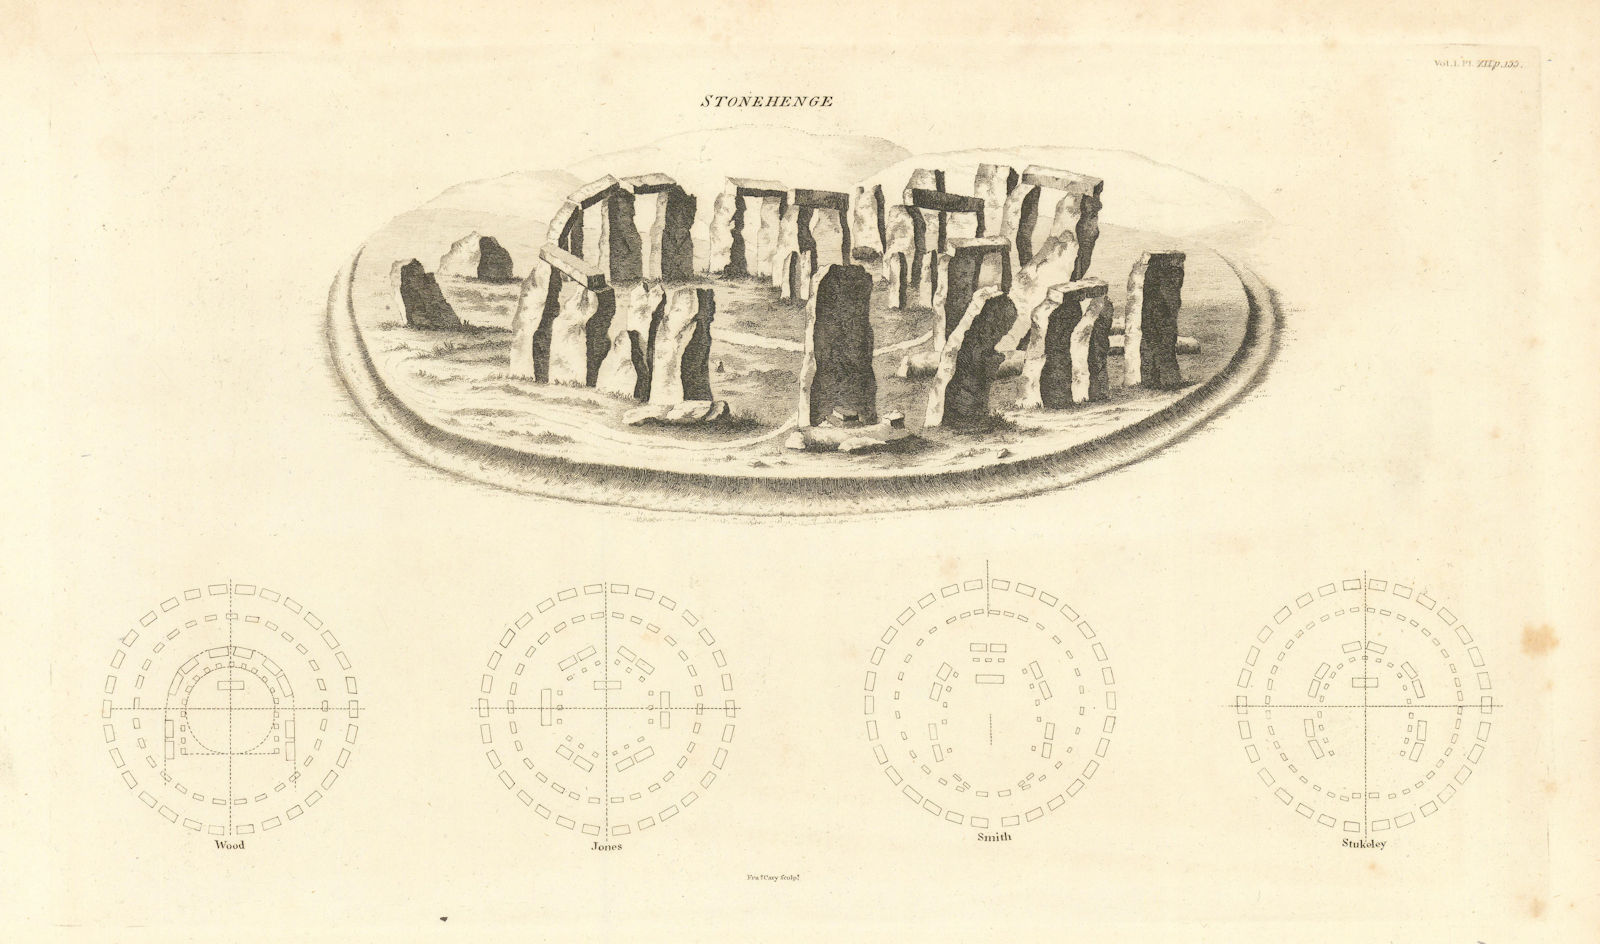 Stonehenge view & ground plans by Wood, Jones, Smith & Stukeley. CARY 1806 map